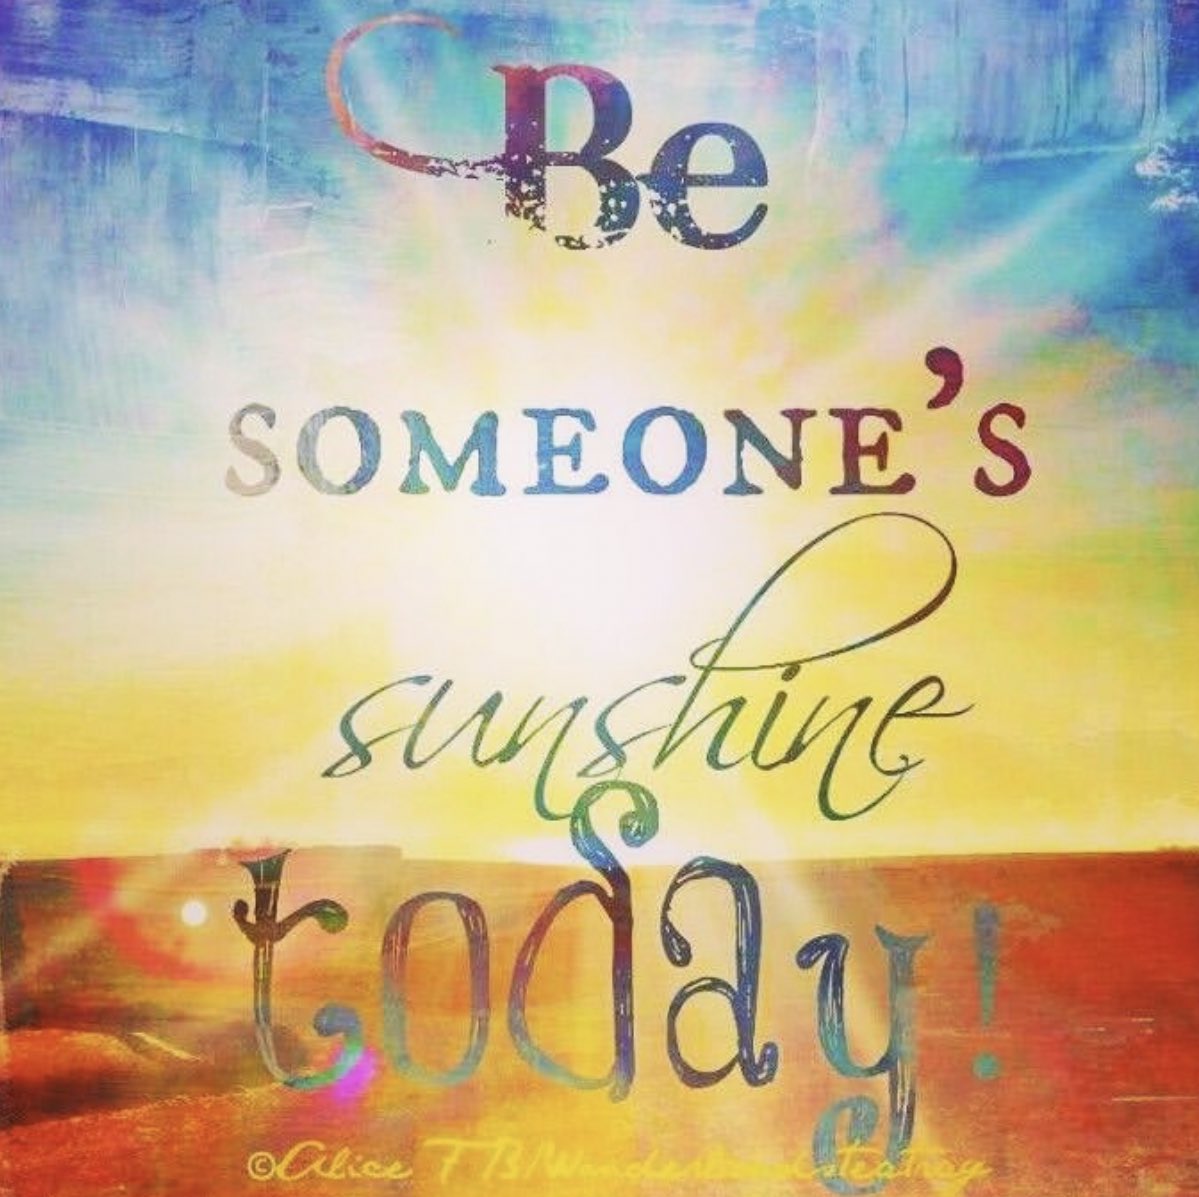 Tuesday Friendly Reminder…Be someone’s sunshine today. ☀️🧡 #KindnessMatters #tuesdayvibe #tuesdaythoughts #bekind